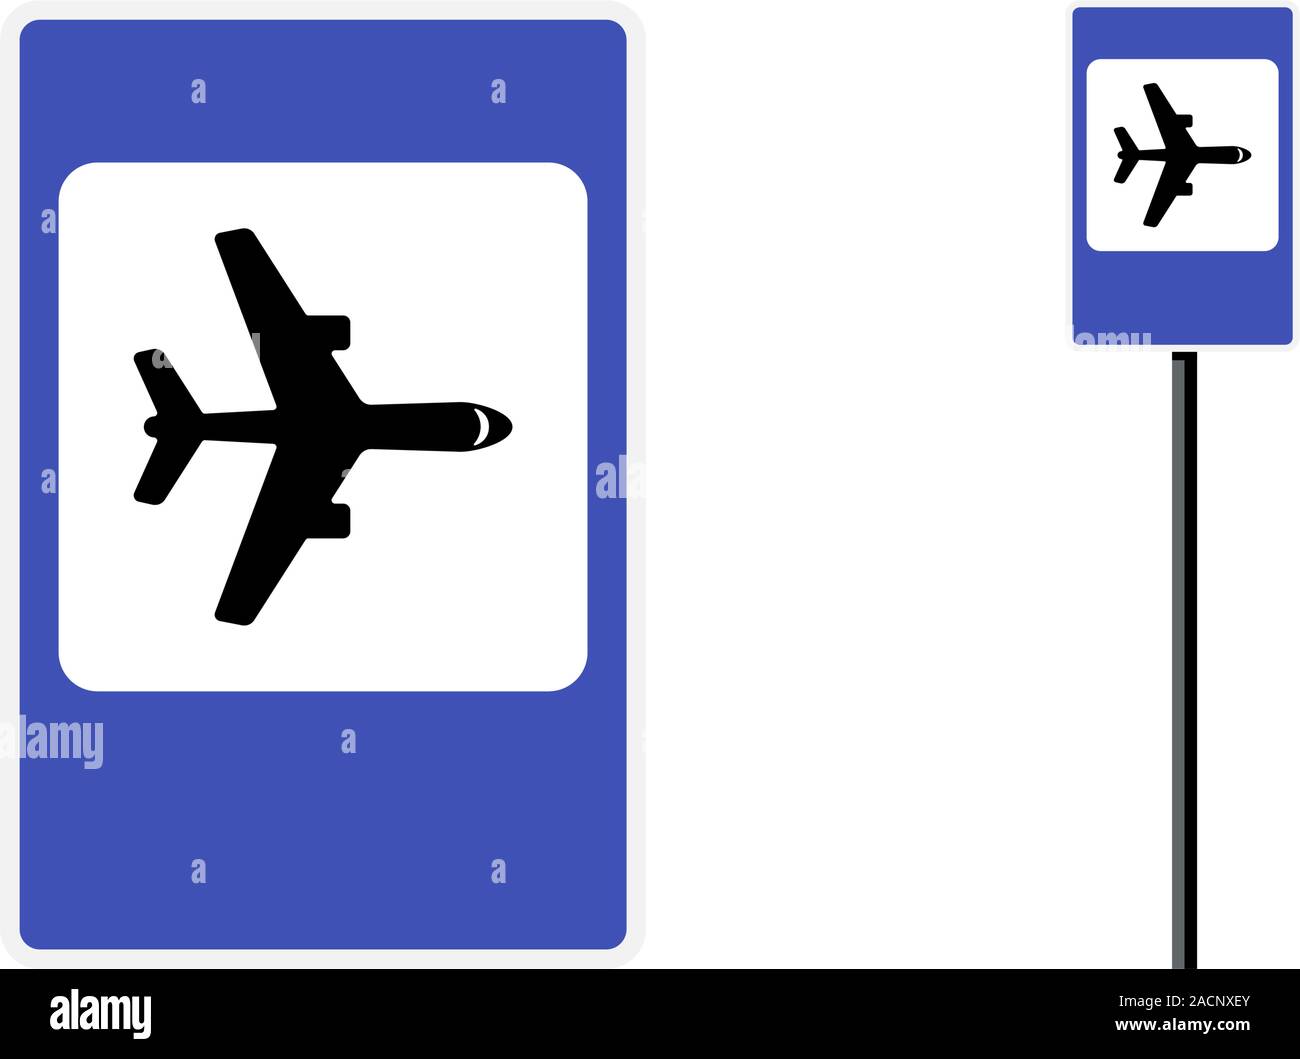 Airport Road Sign. Flugverkehr Symbol auf Blue Square. Vektor Beschilderung Abbildung Stock Vektor